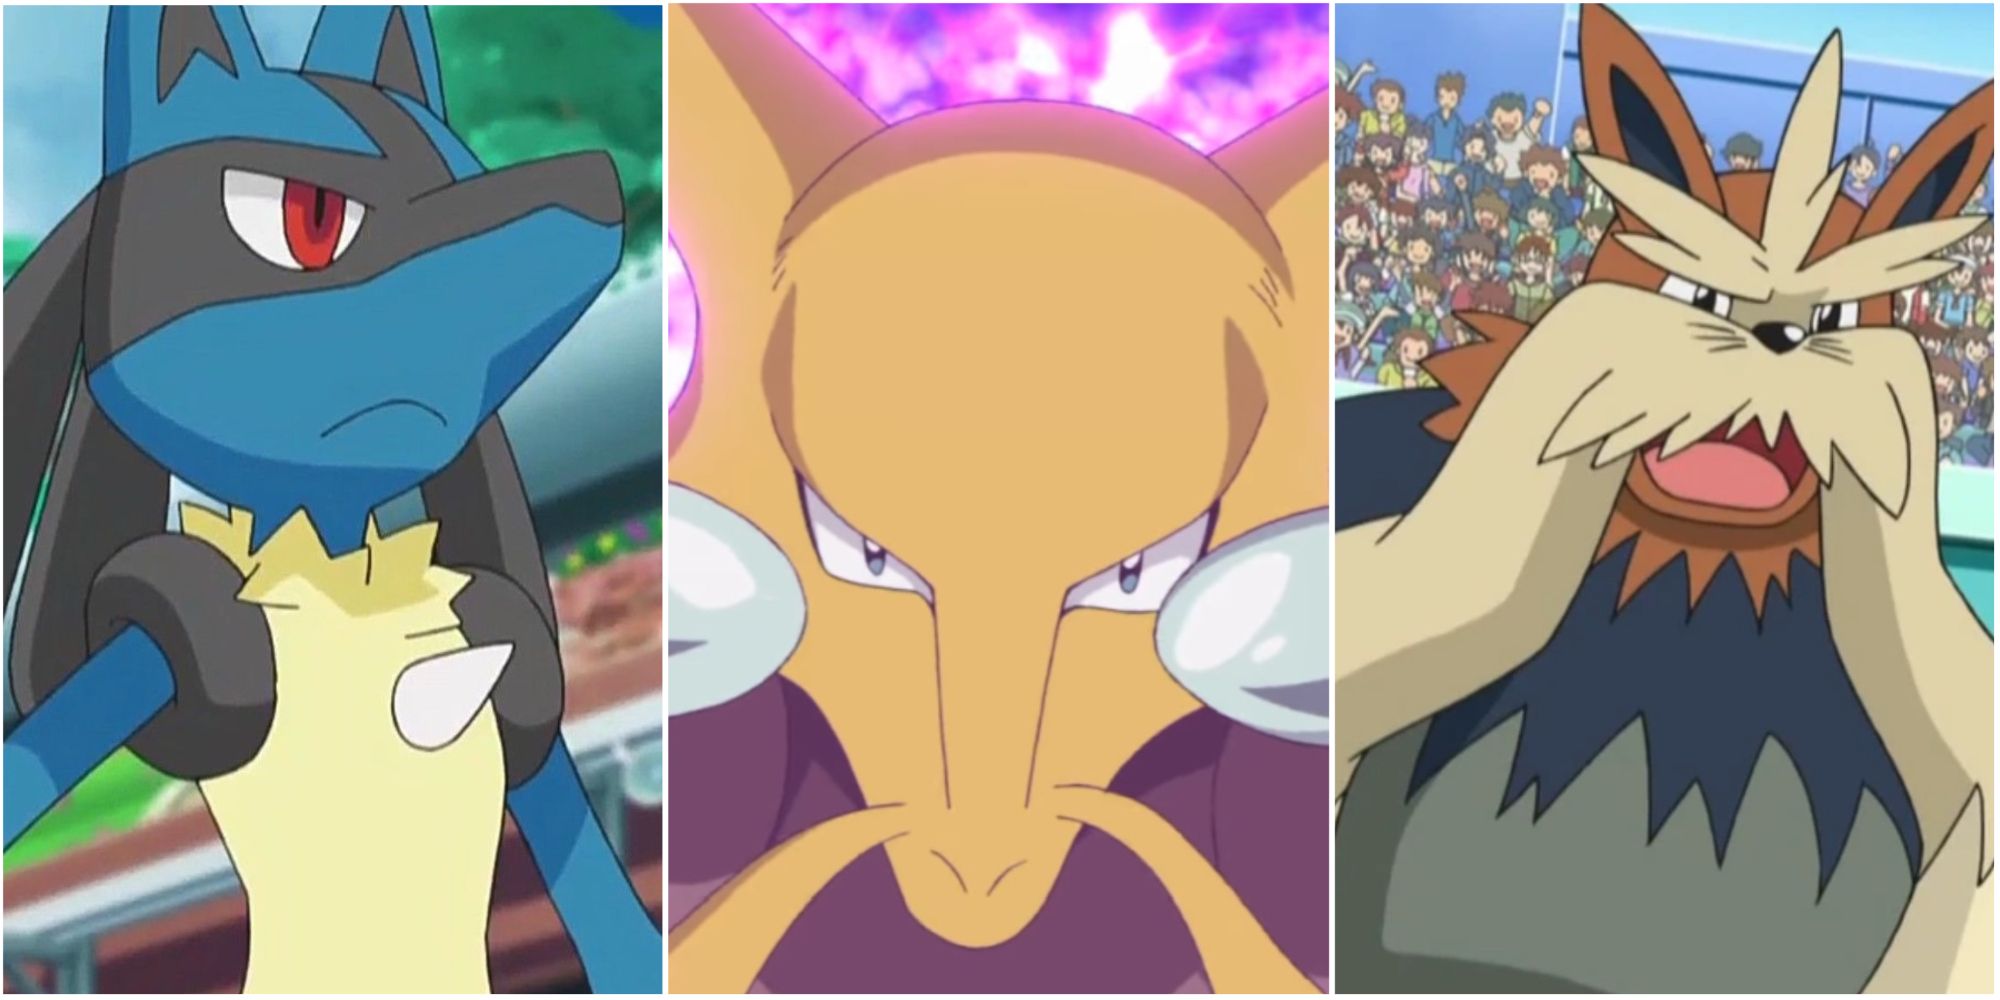 Split image screenshots of Lucario, Alakazam, and Stoutland in the Pokemon anime.